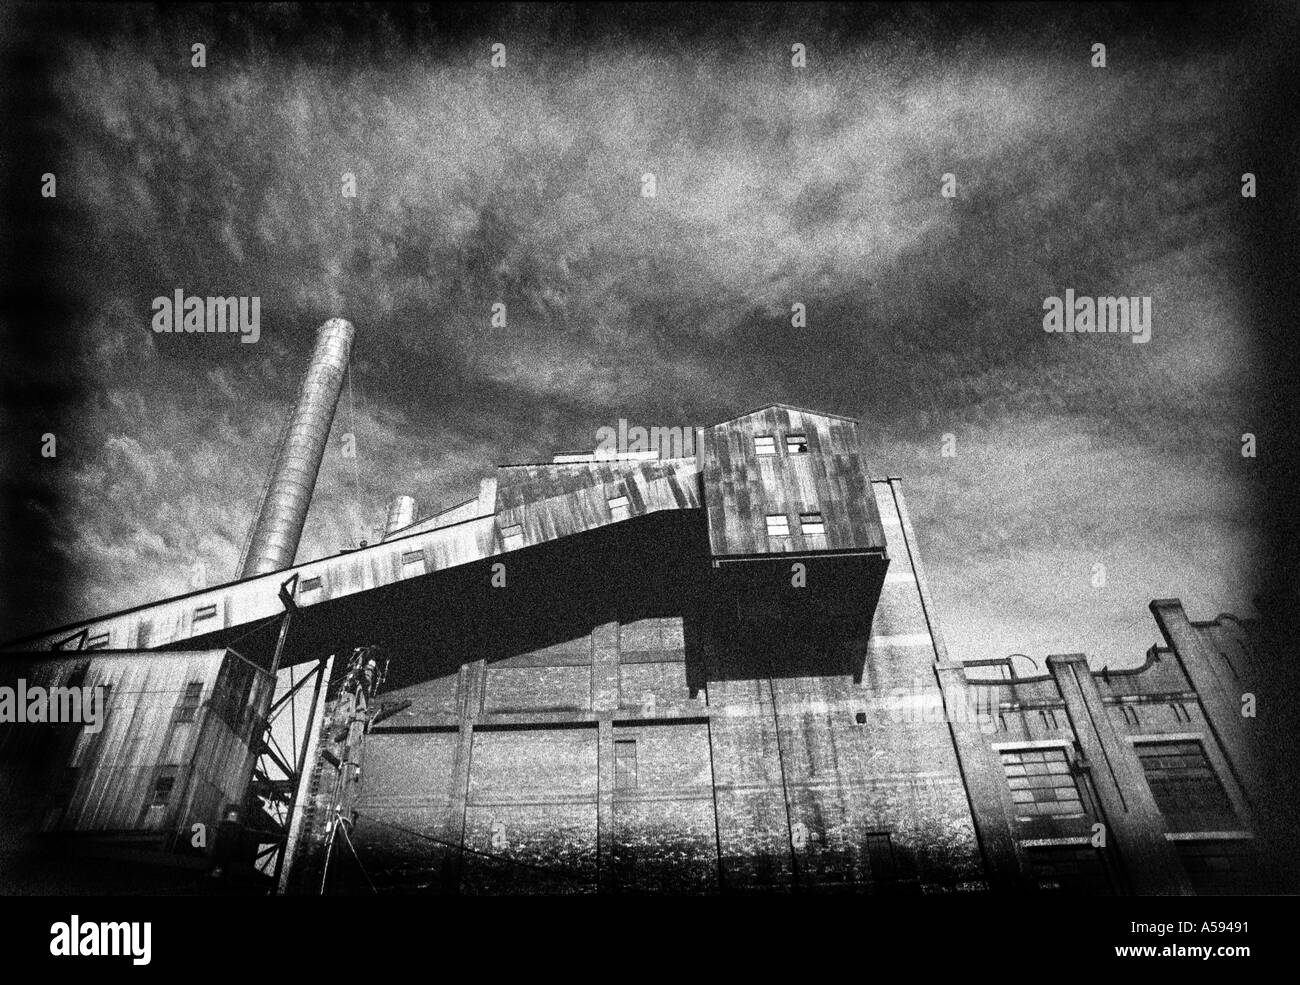 Building balmain sydney Black and White Stock Photos & Images - Alamy